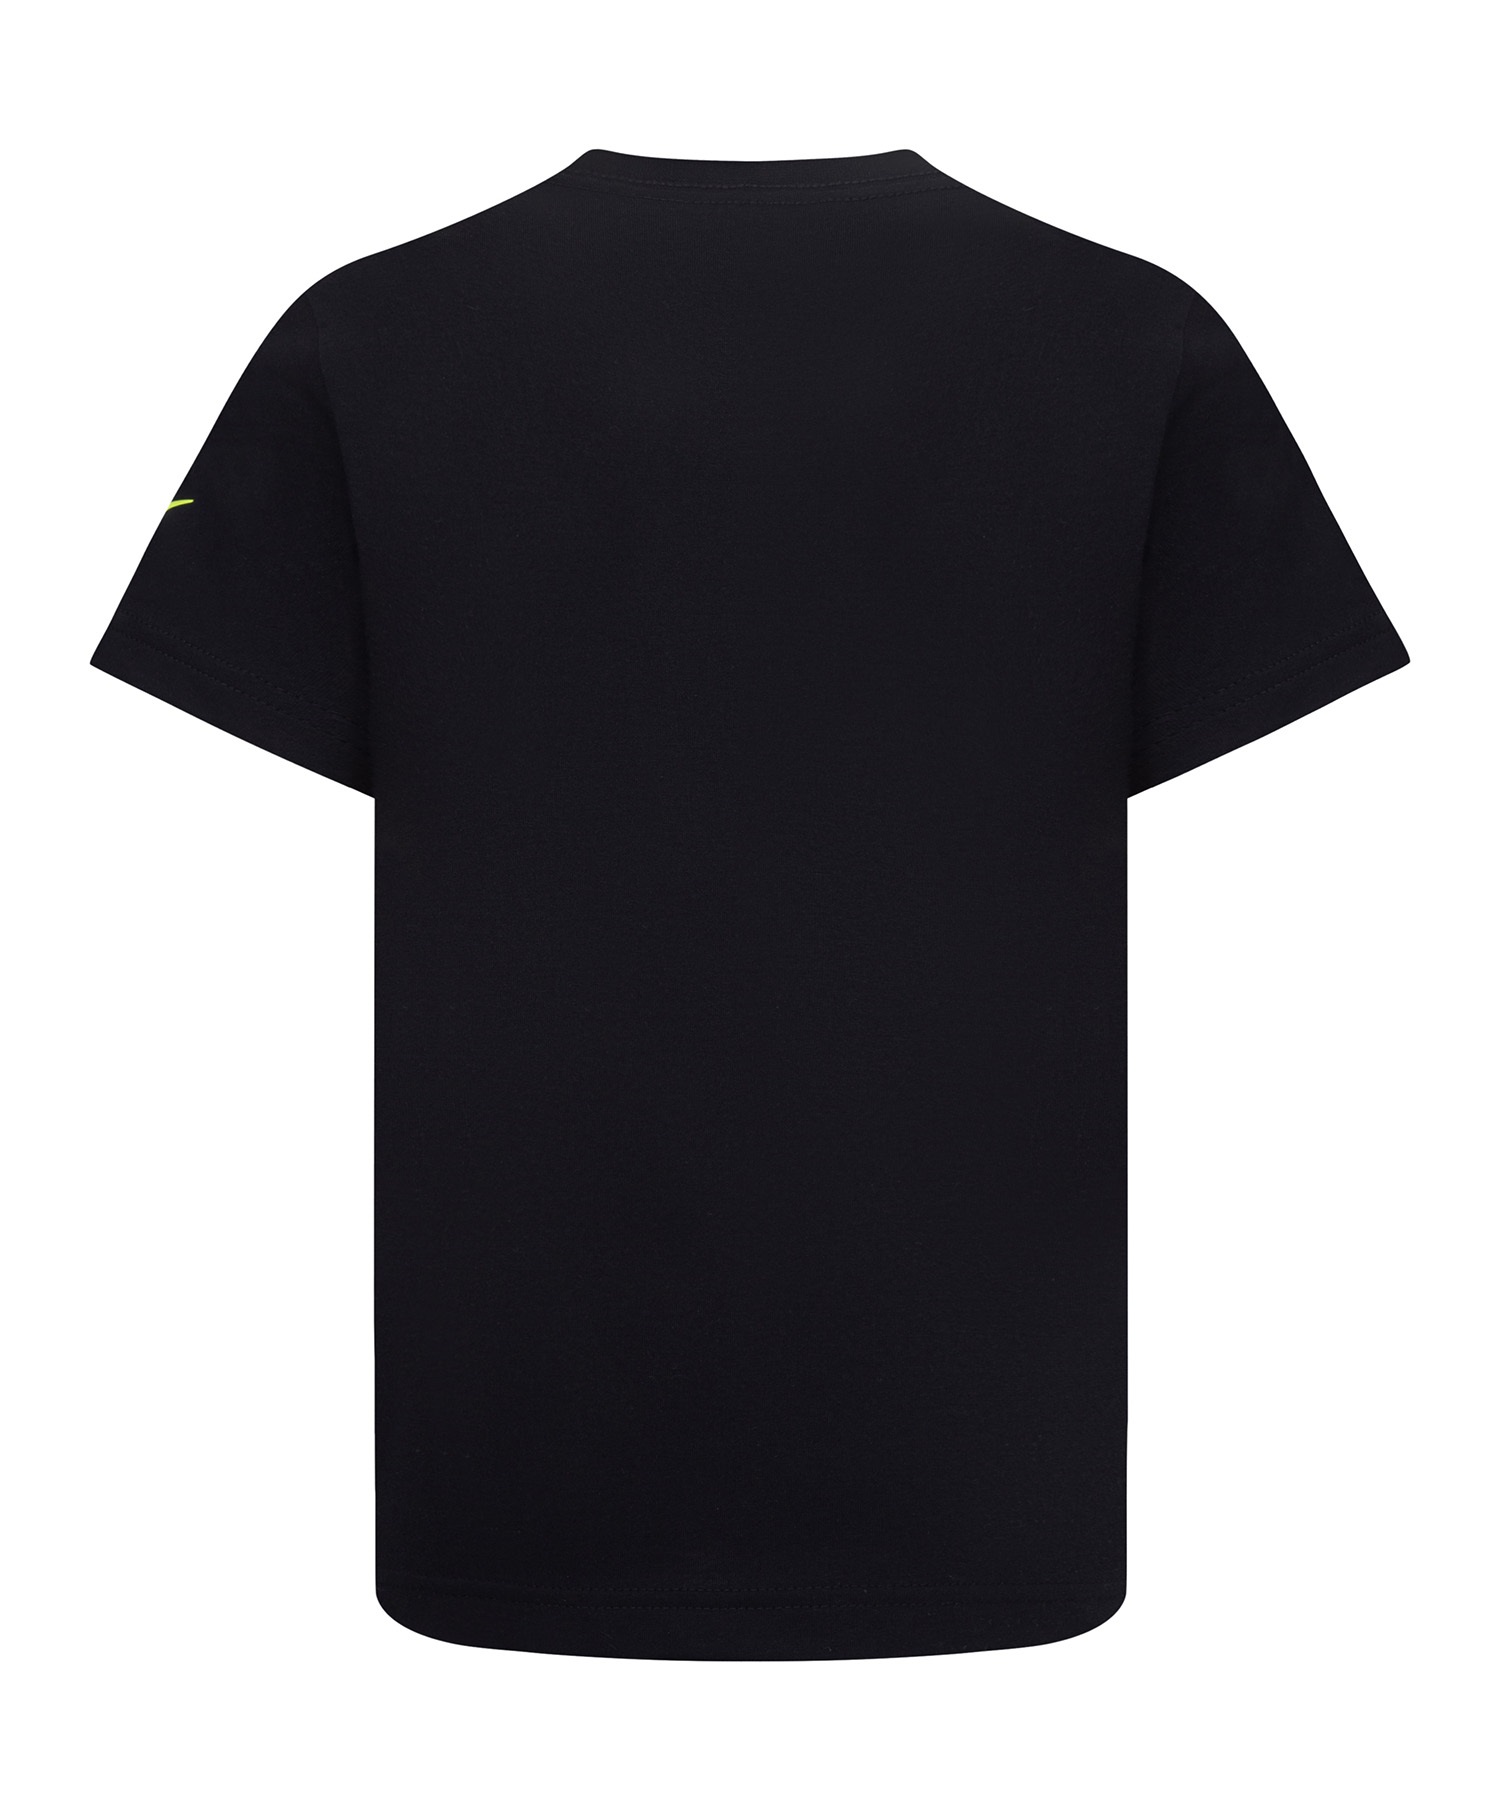 NIKE ナイキ キッズ Tシャツ 半袖 86L918-023(BLK-105cm)